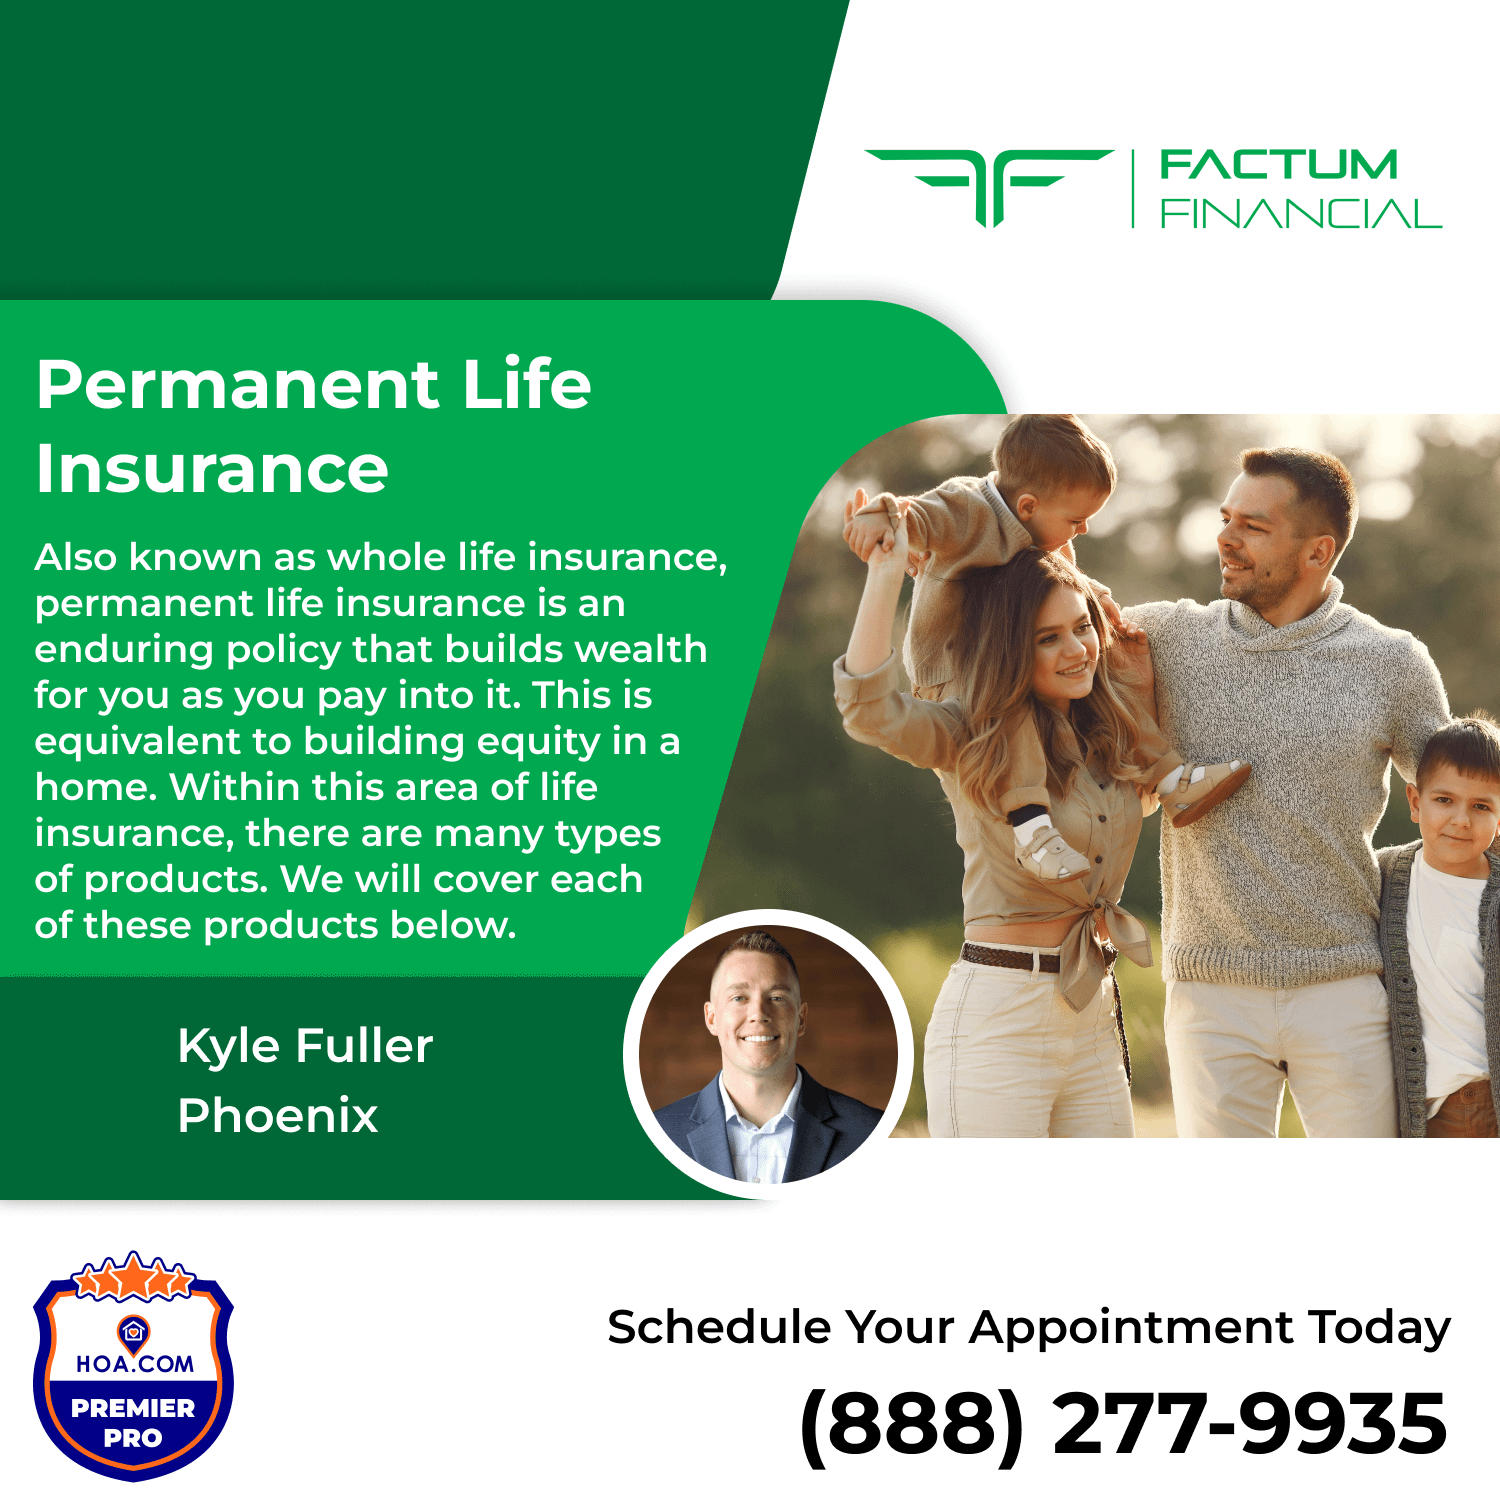 Factum Financial Permanent Life Insurance